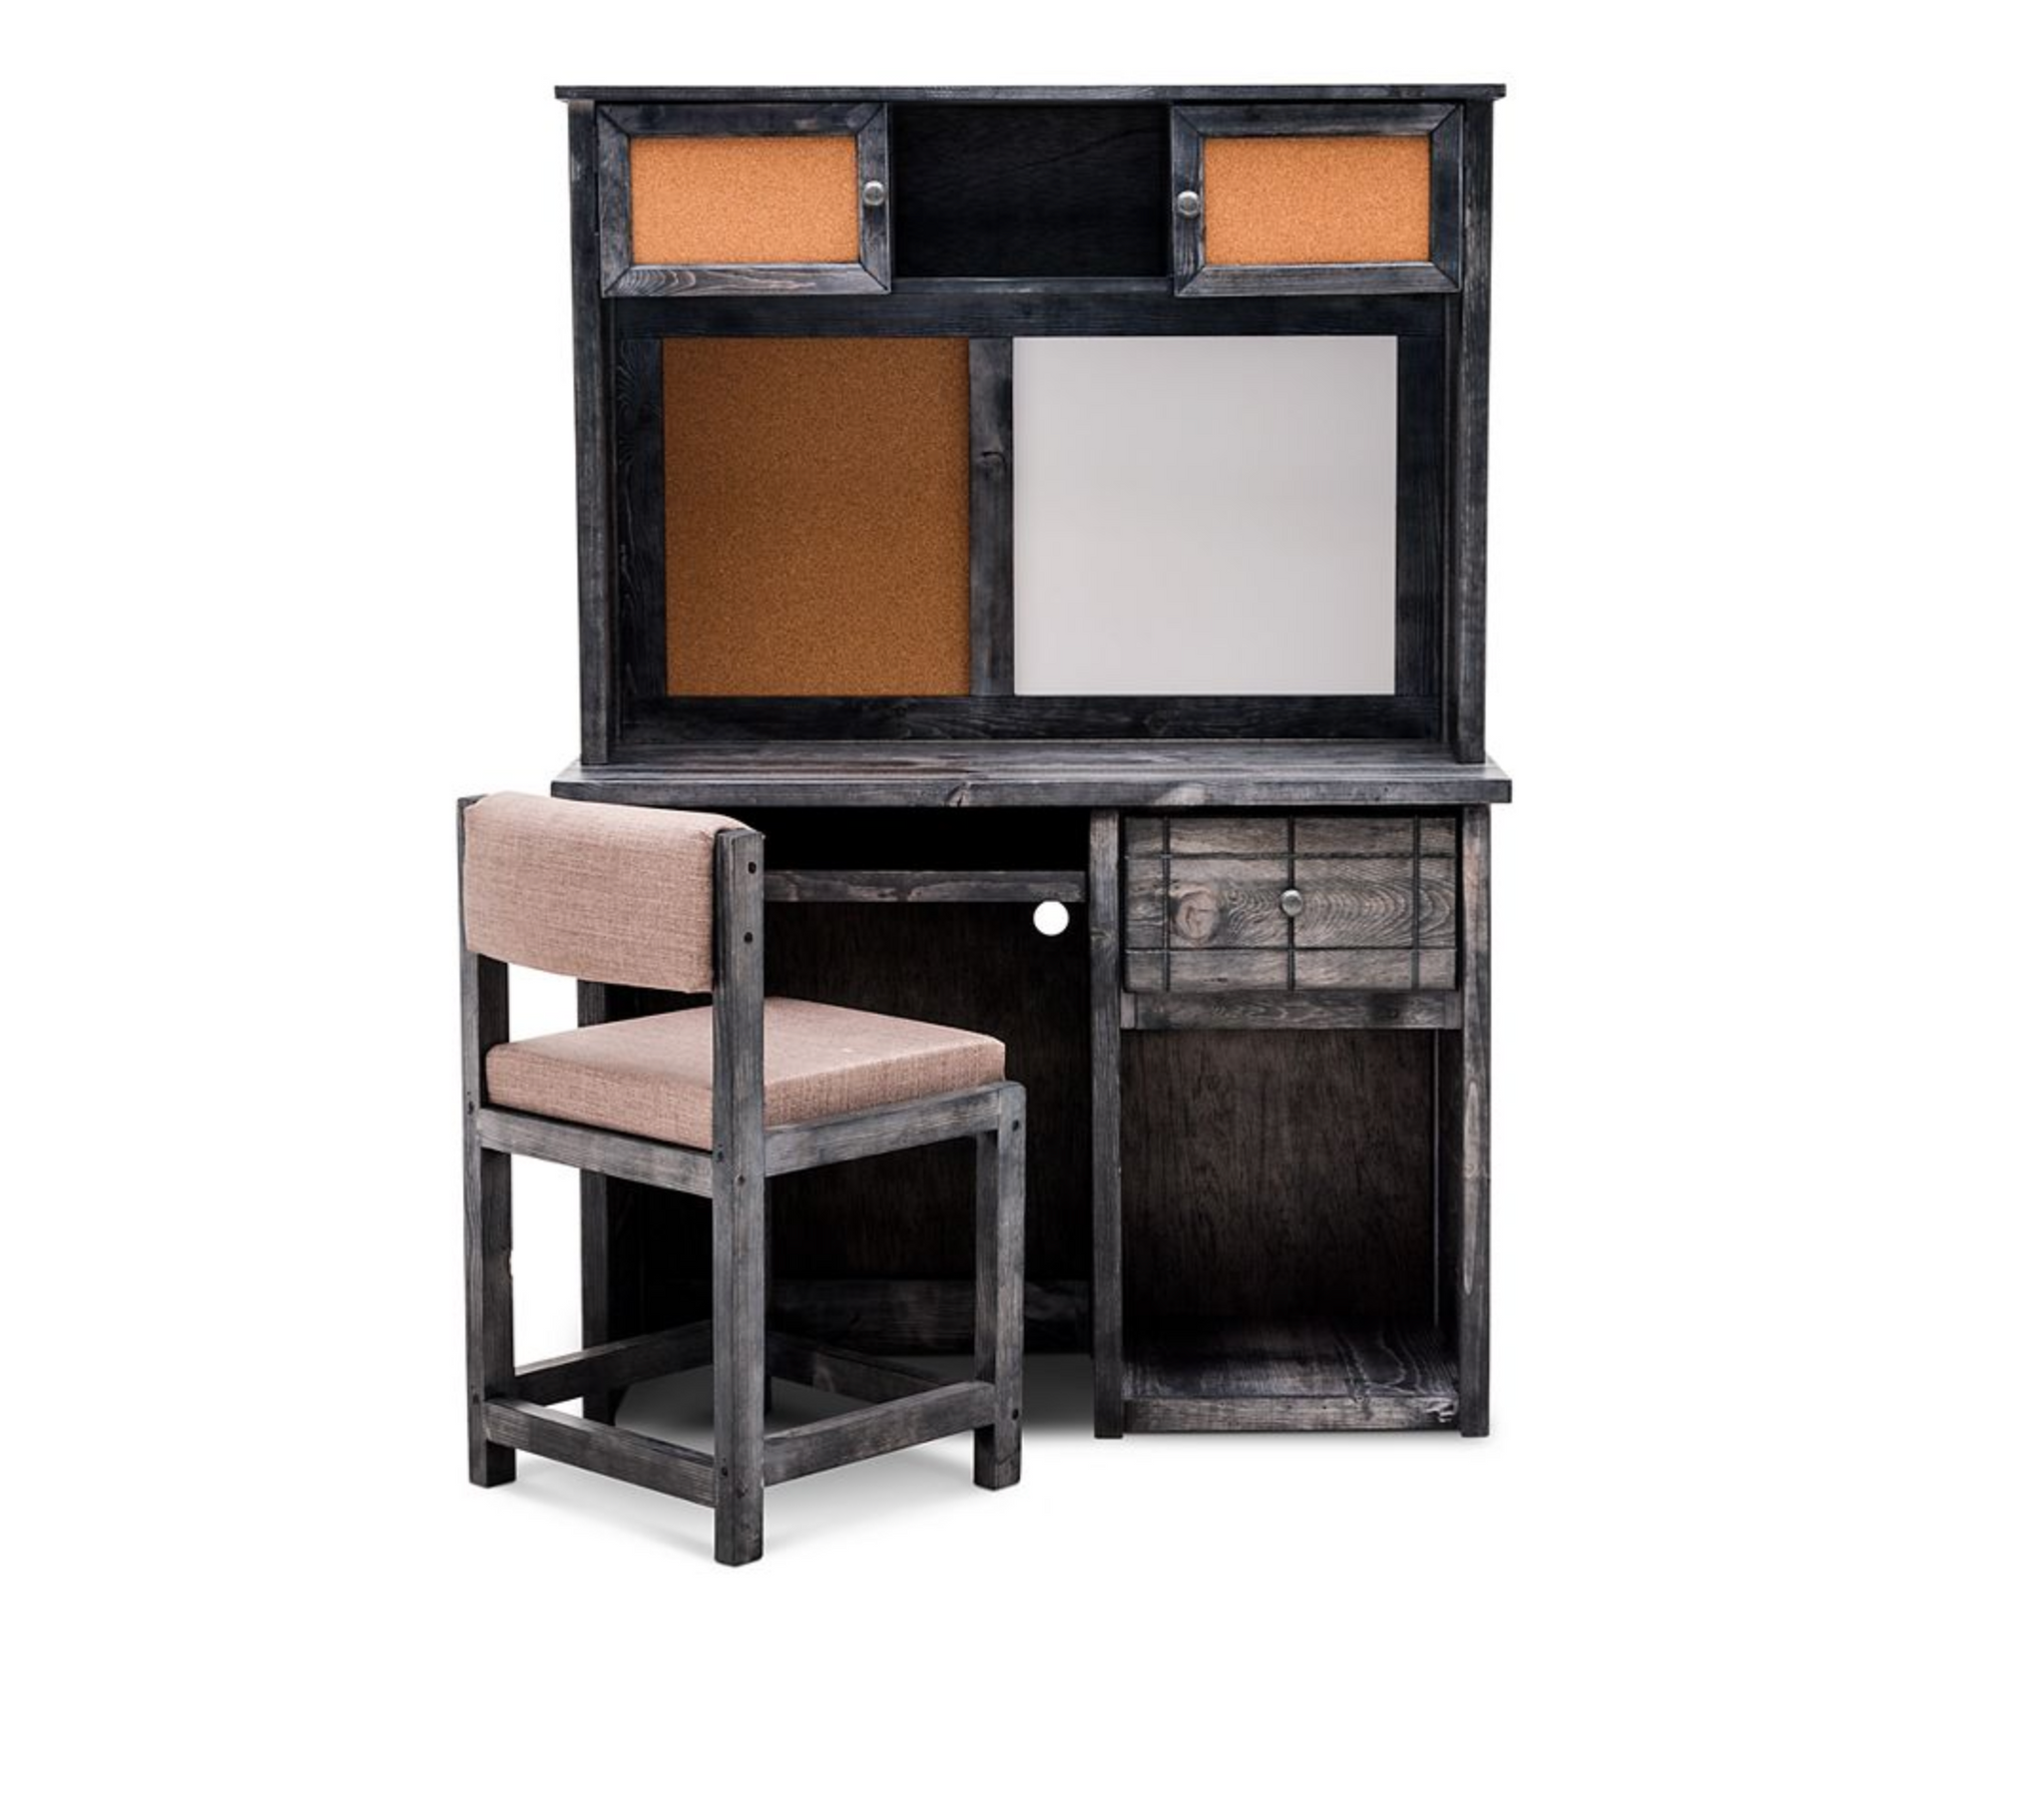 Student Life? - M&J Design Furniture 